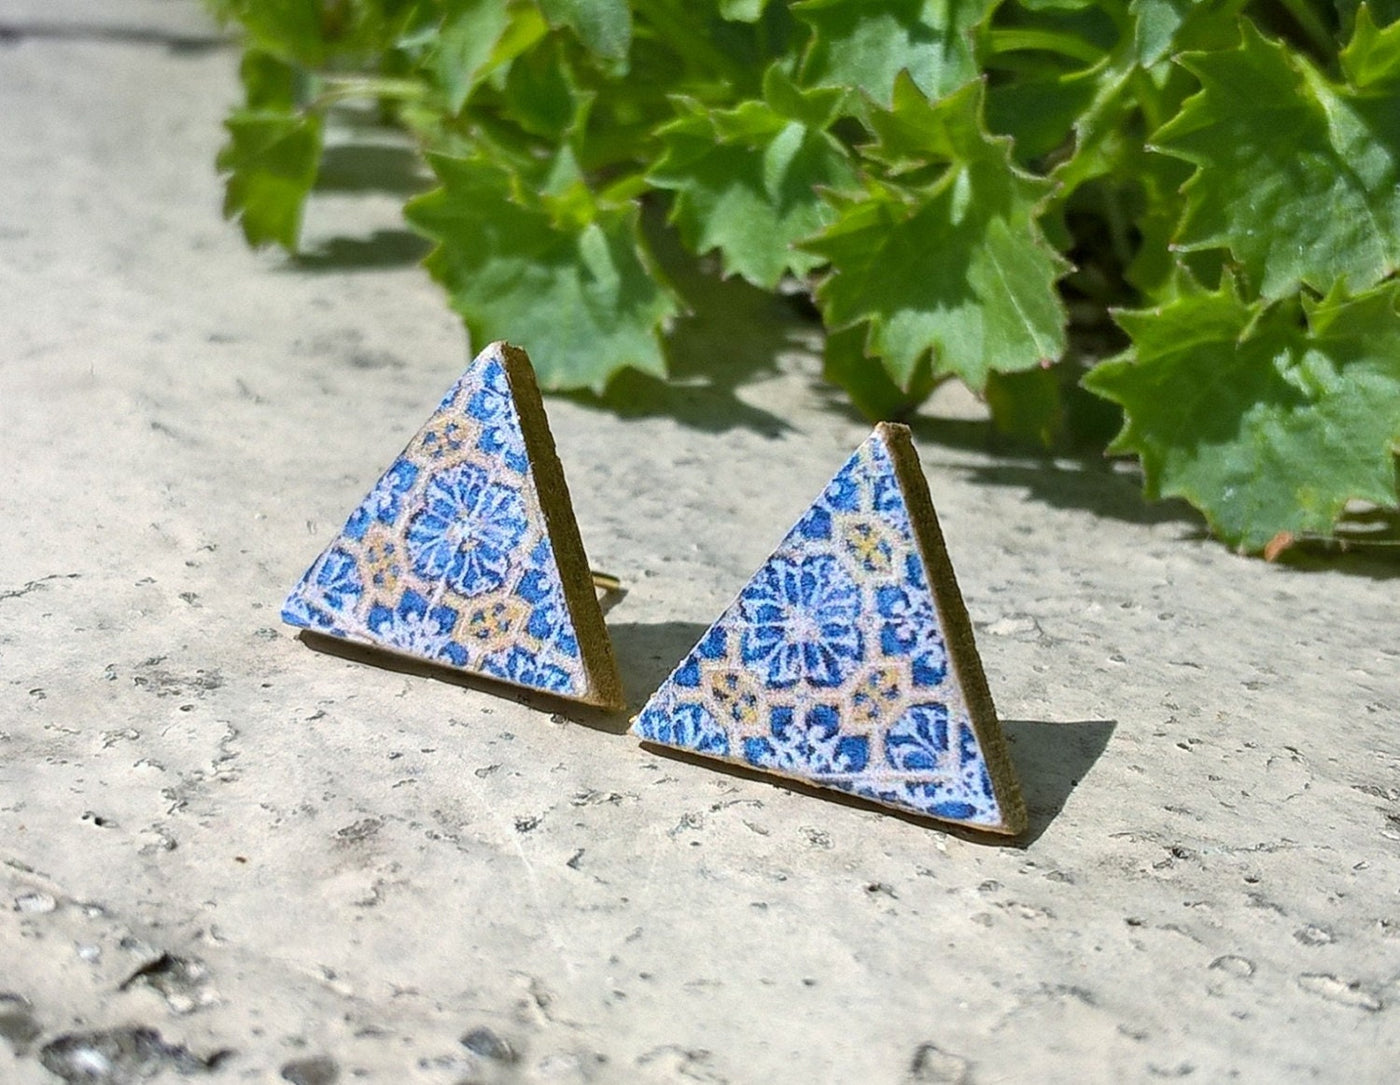 LAVINIA - Triangle Antique Tiles Stud Earrings